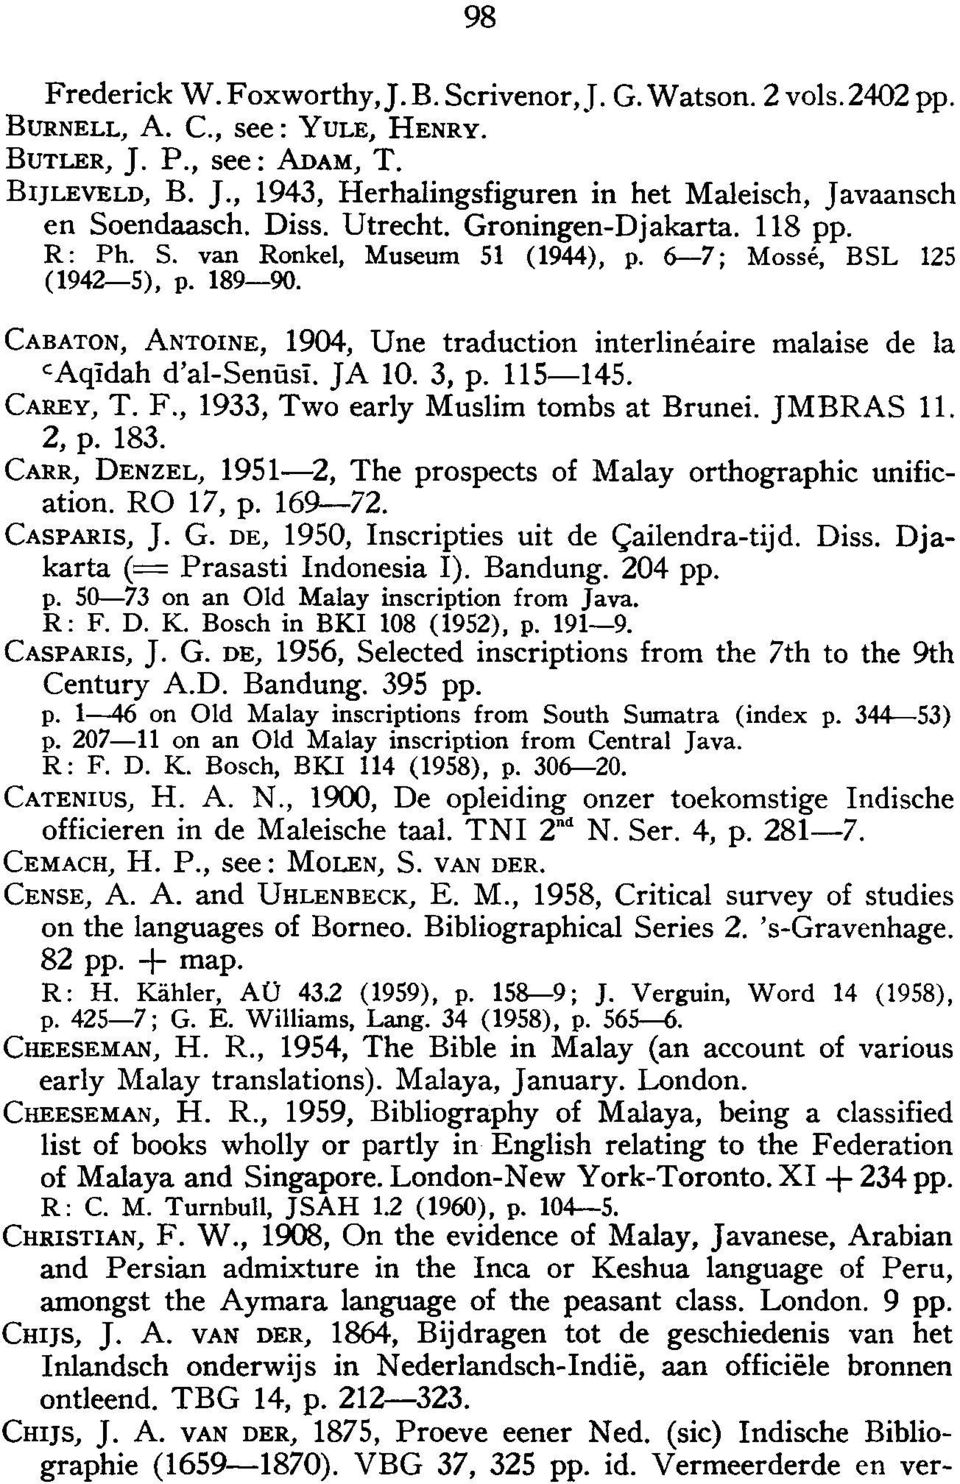 CABATON, ANTOINE, 1904, Une traduction interlineaire malaise de la CAqidah d'al-seniisl. JA 10. 3, p. 115-145. CAREY, T. F., 1933, Two early Muslim tombs at Brunei. JMBRAS 11. 2, p. 183.